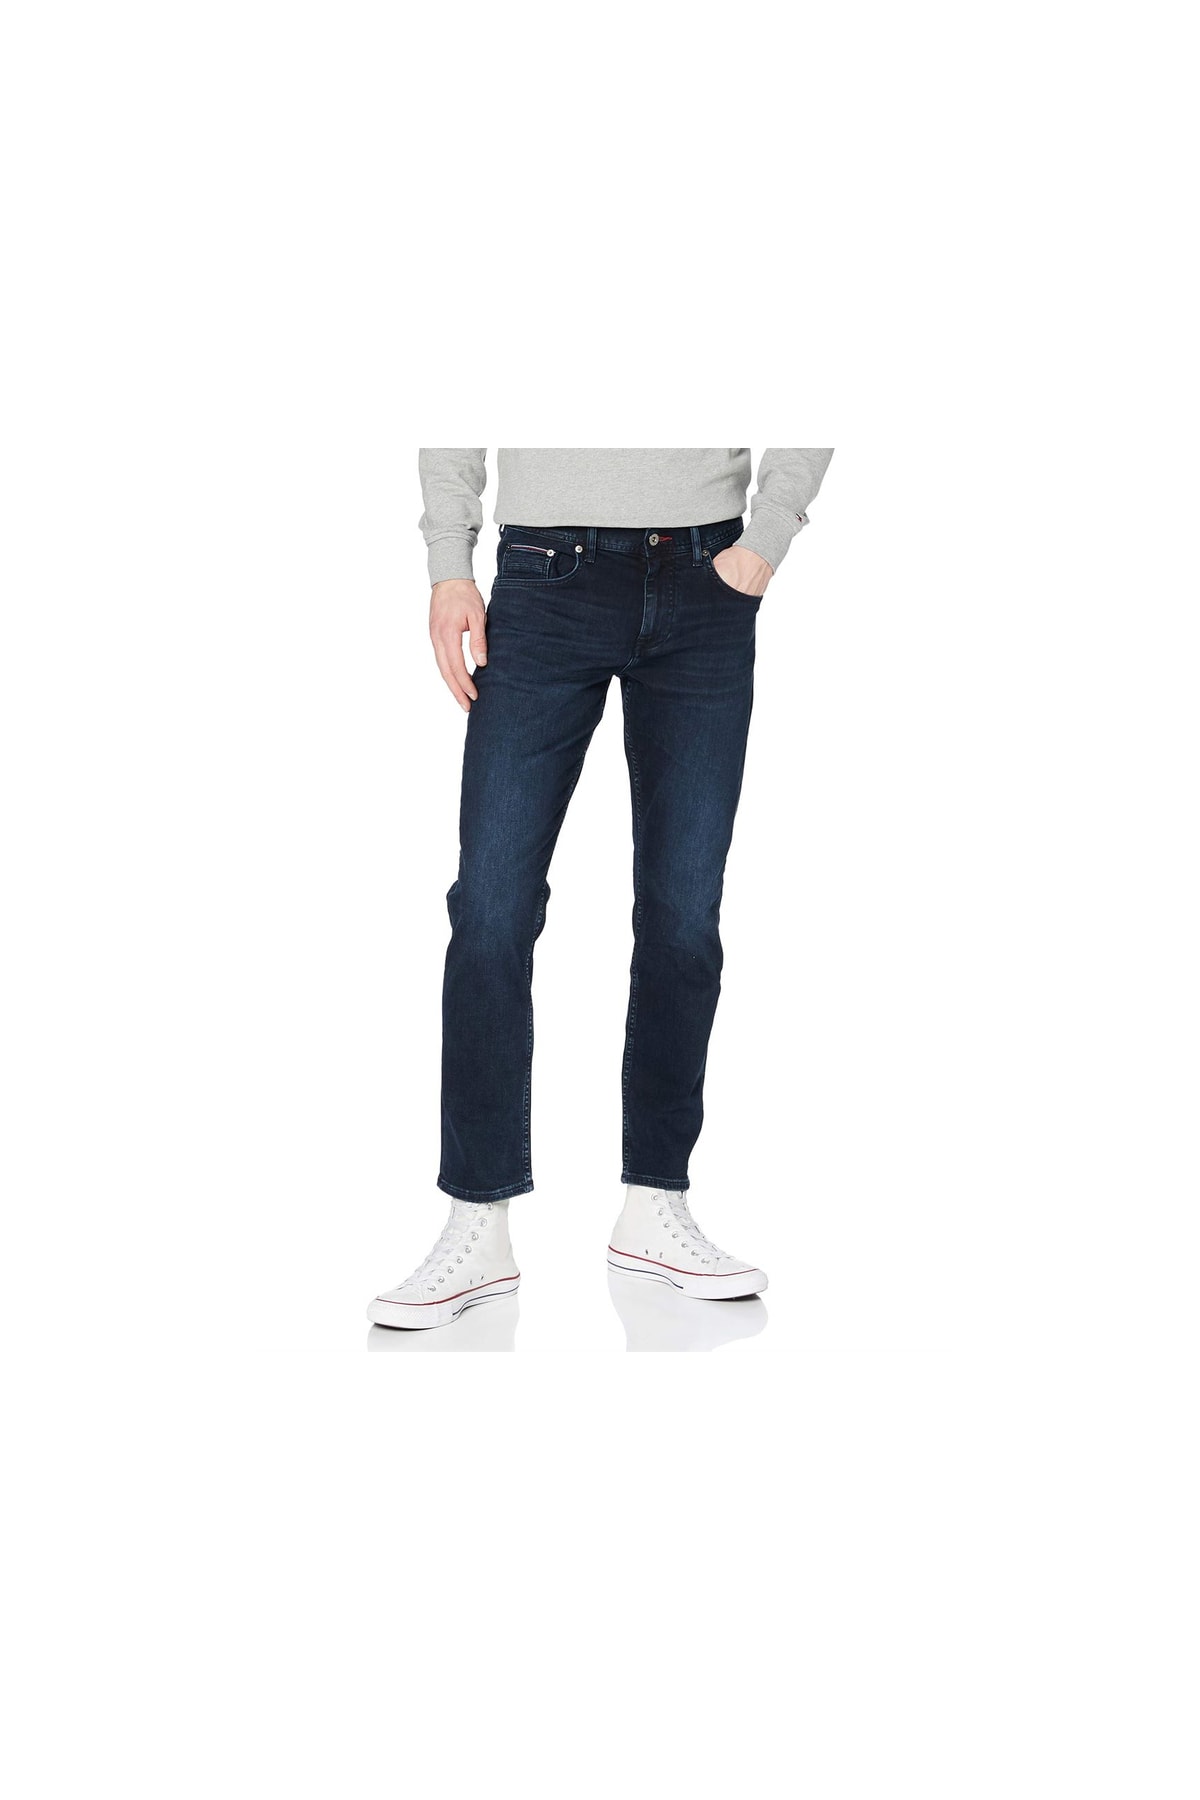 Tommy Hilfiger Jeans Mehrfarbig Straight Fast ausverkauft